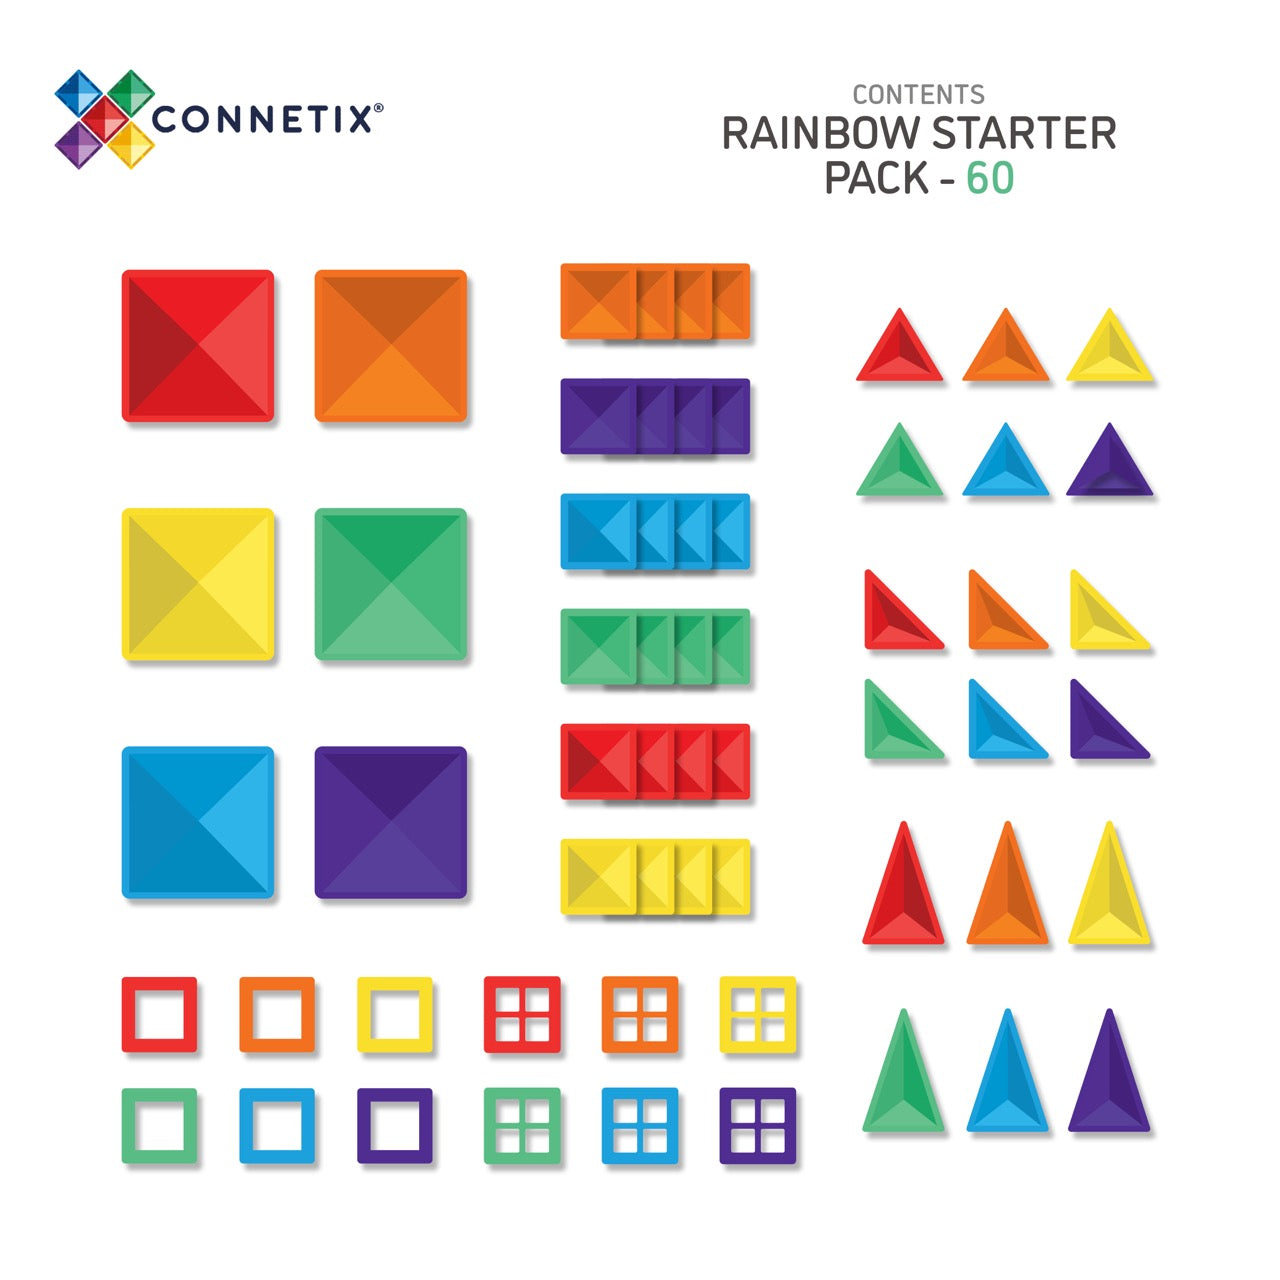 CONNETIX - Magnetic Tiles Rainbow Starter Pack 60 pc